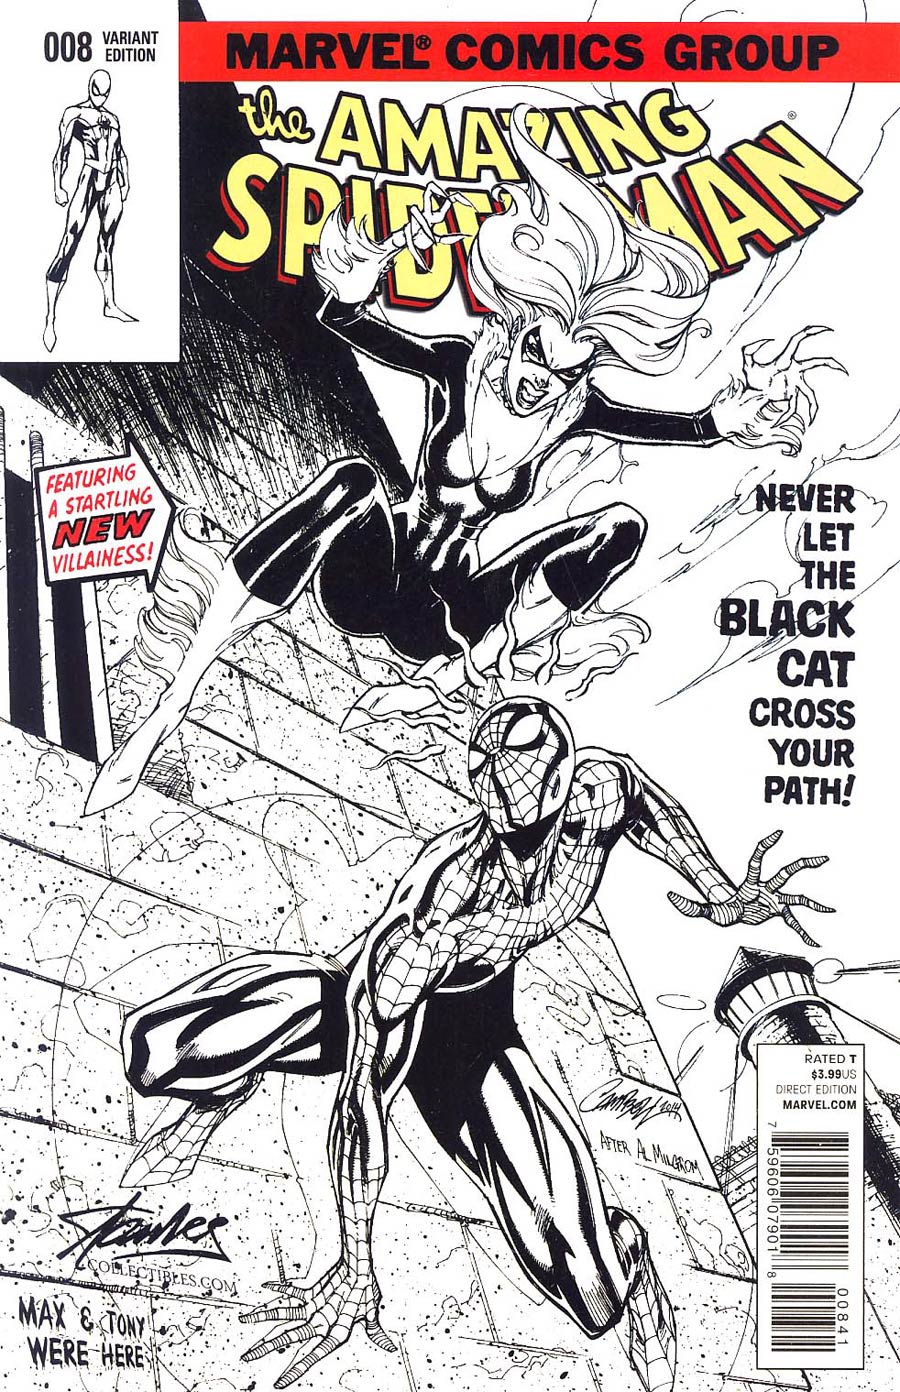 AMAZING SPIDERMAN 10 vol 5 J Scott Campbell BLACK CAT VARIANT